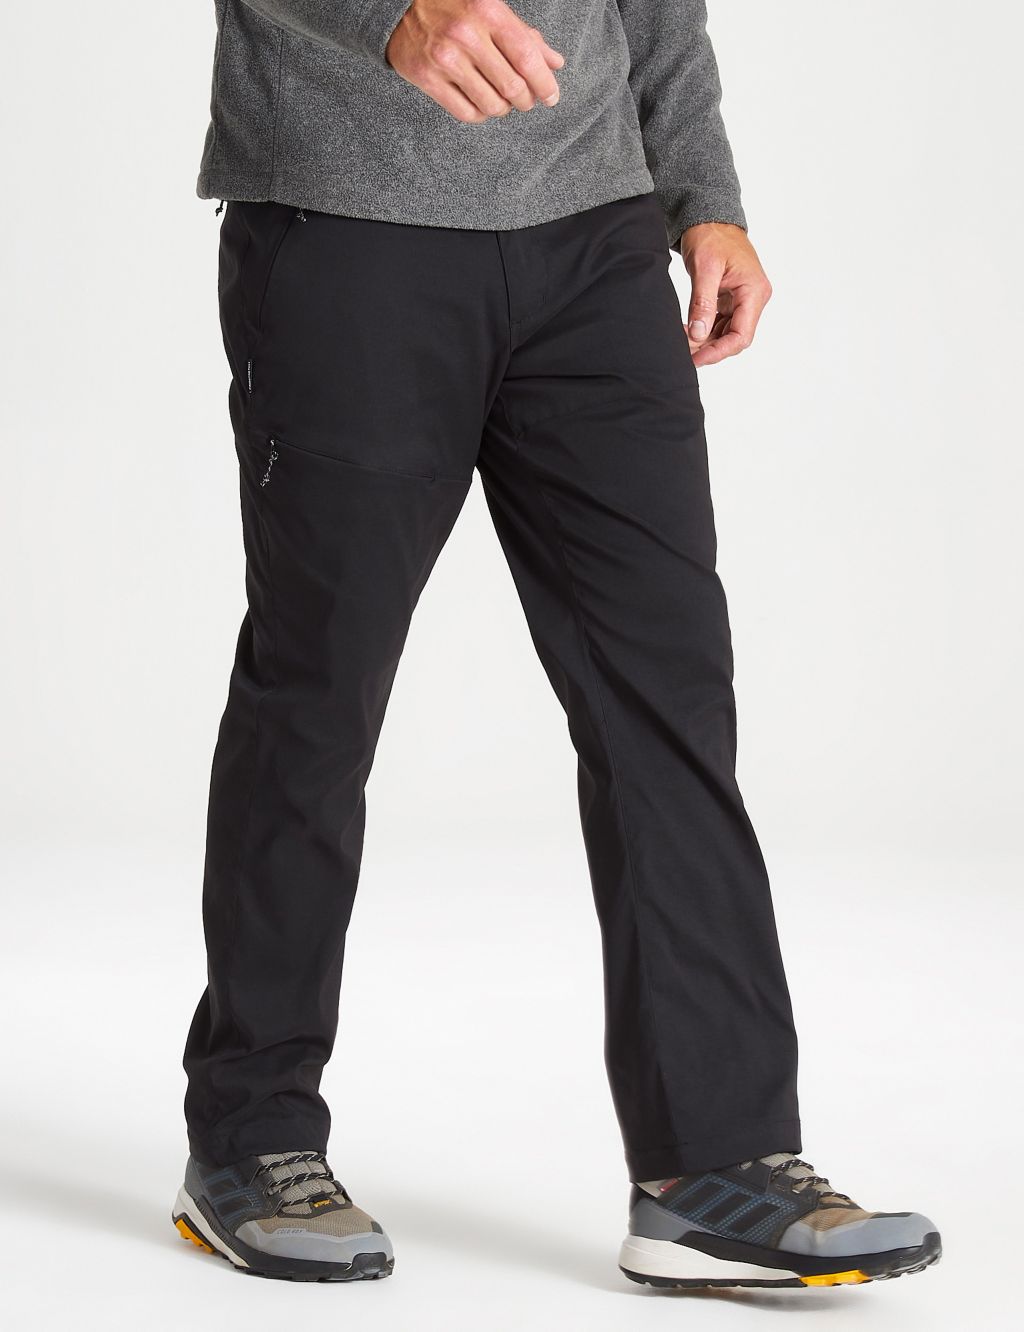 Kiwi Tailored Fit Trekking Trousers image 1